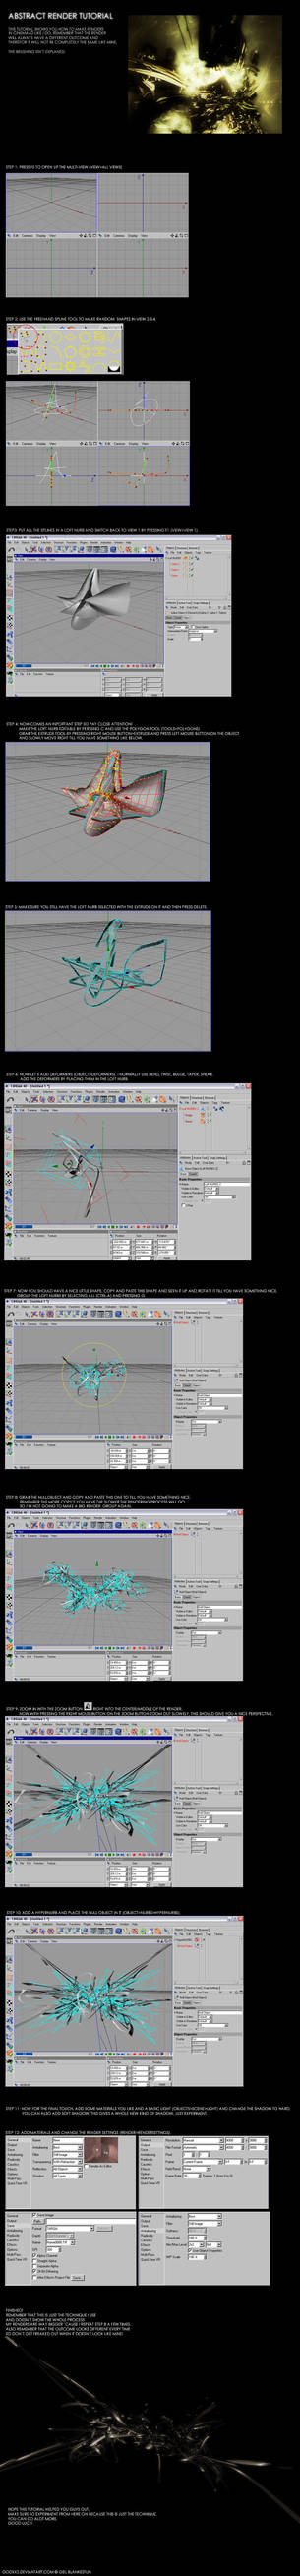 Cinema 4d modelling tutorial